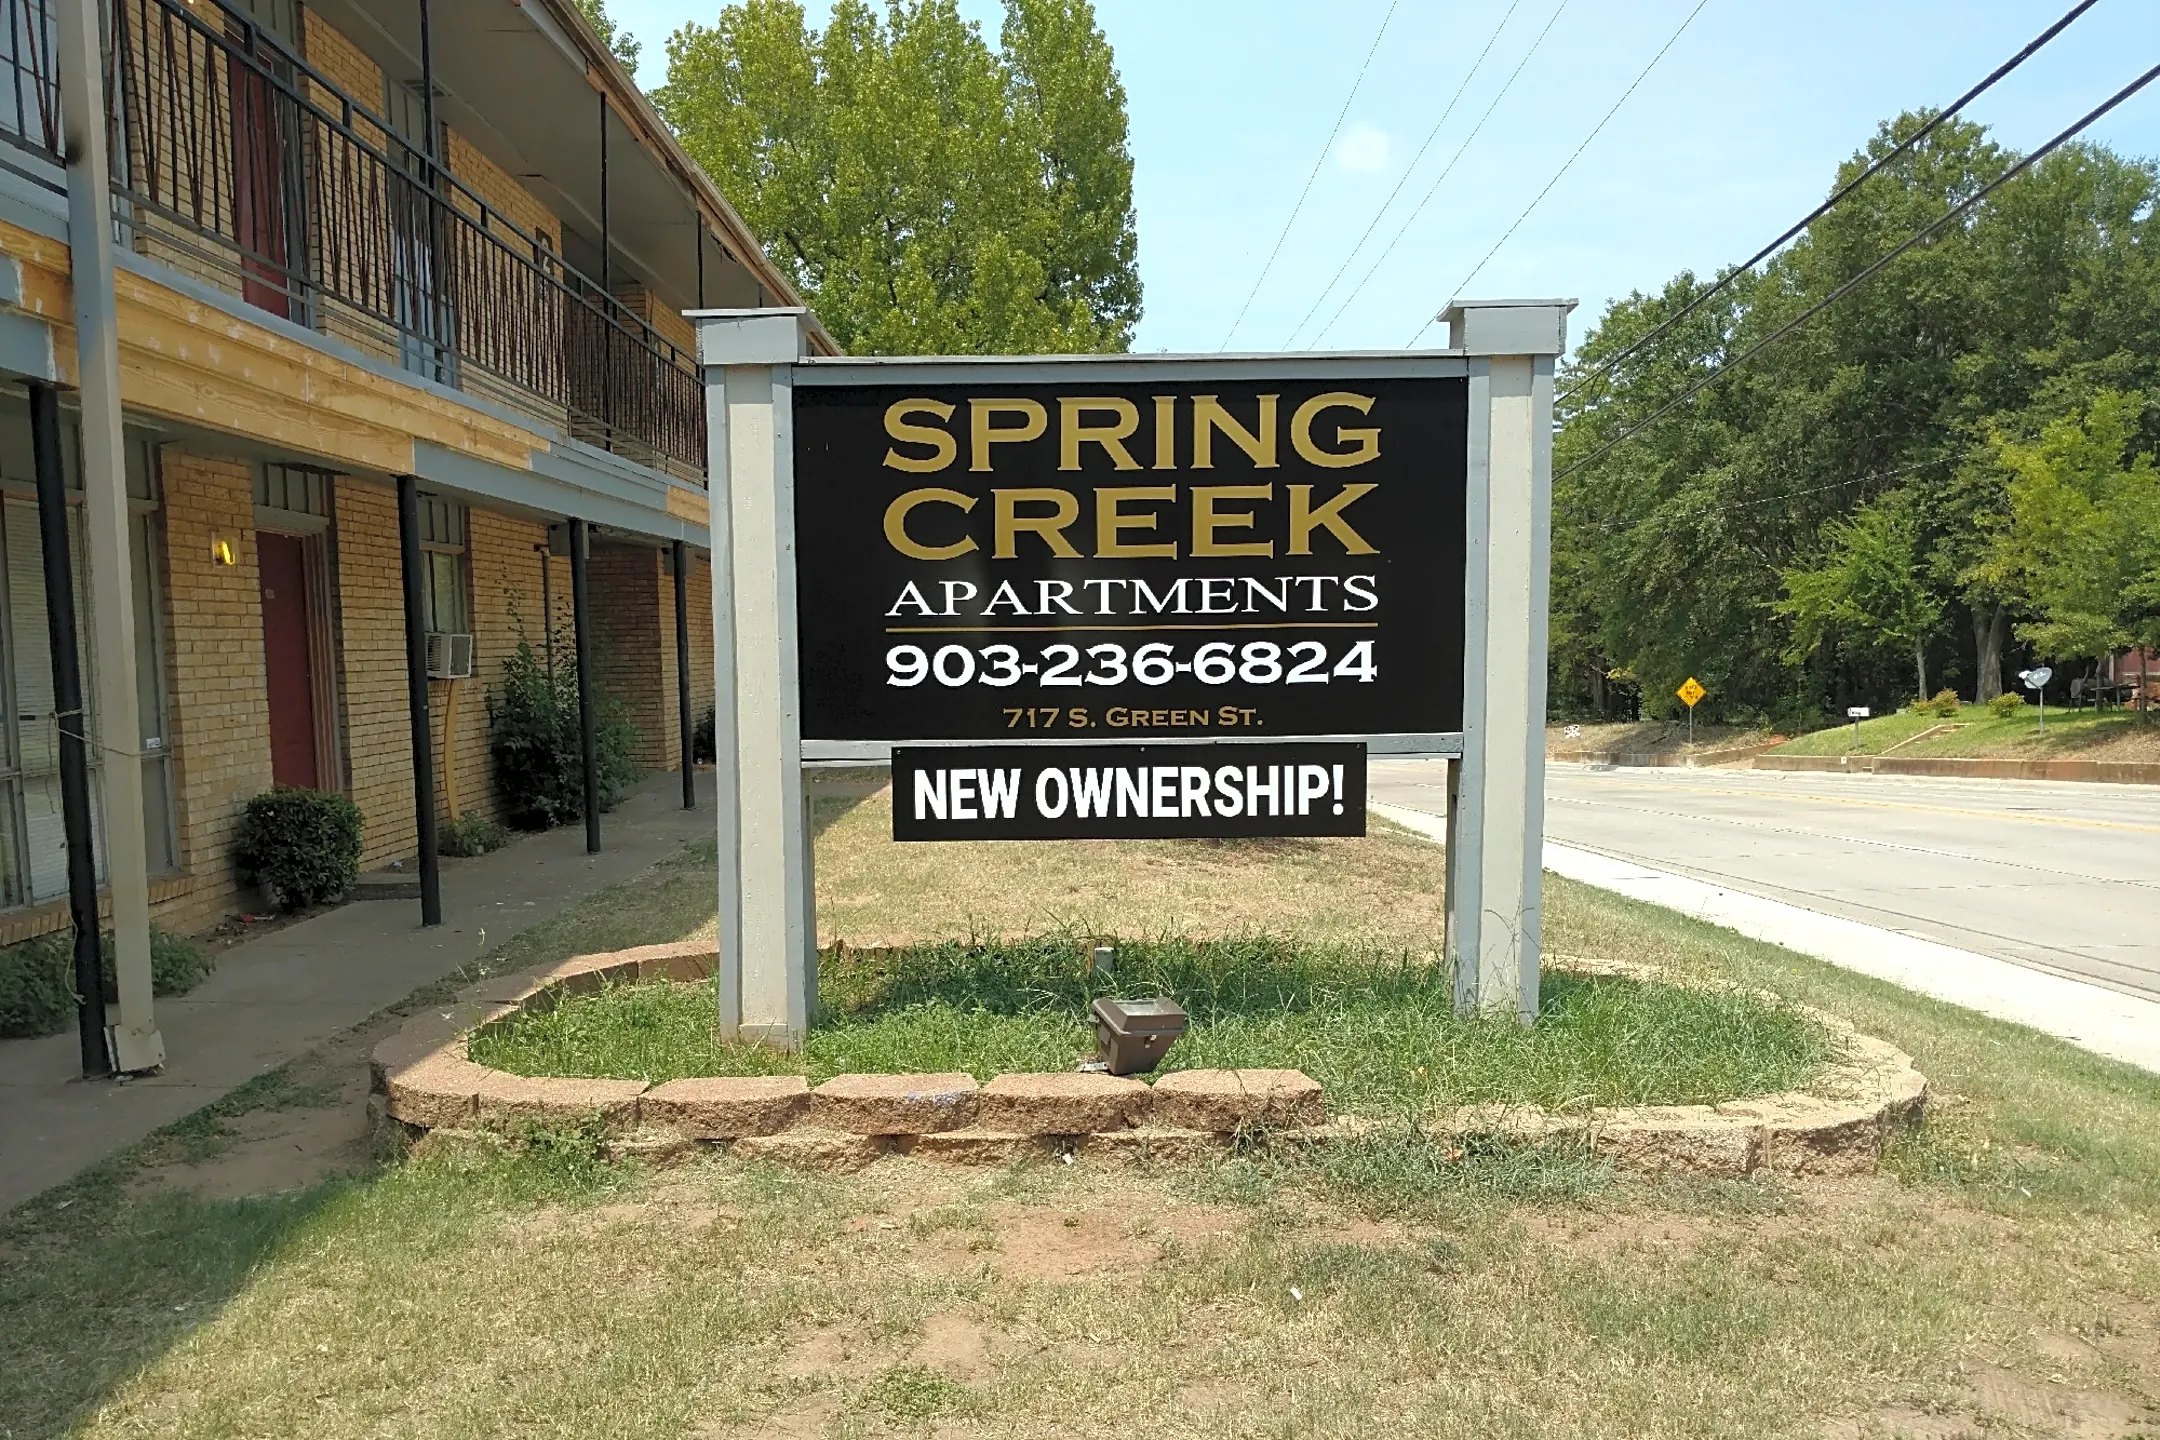 Pool - Spring Creek Apartments - Longview, TX